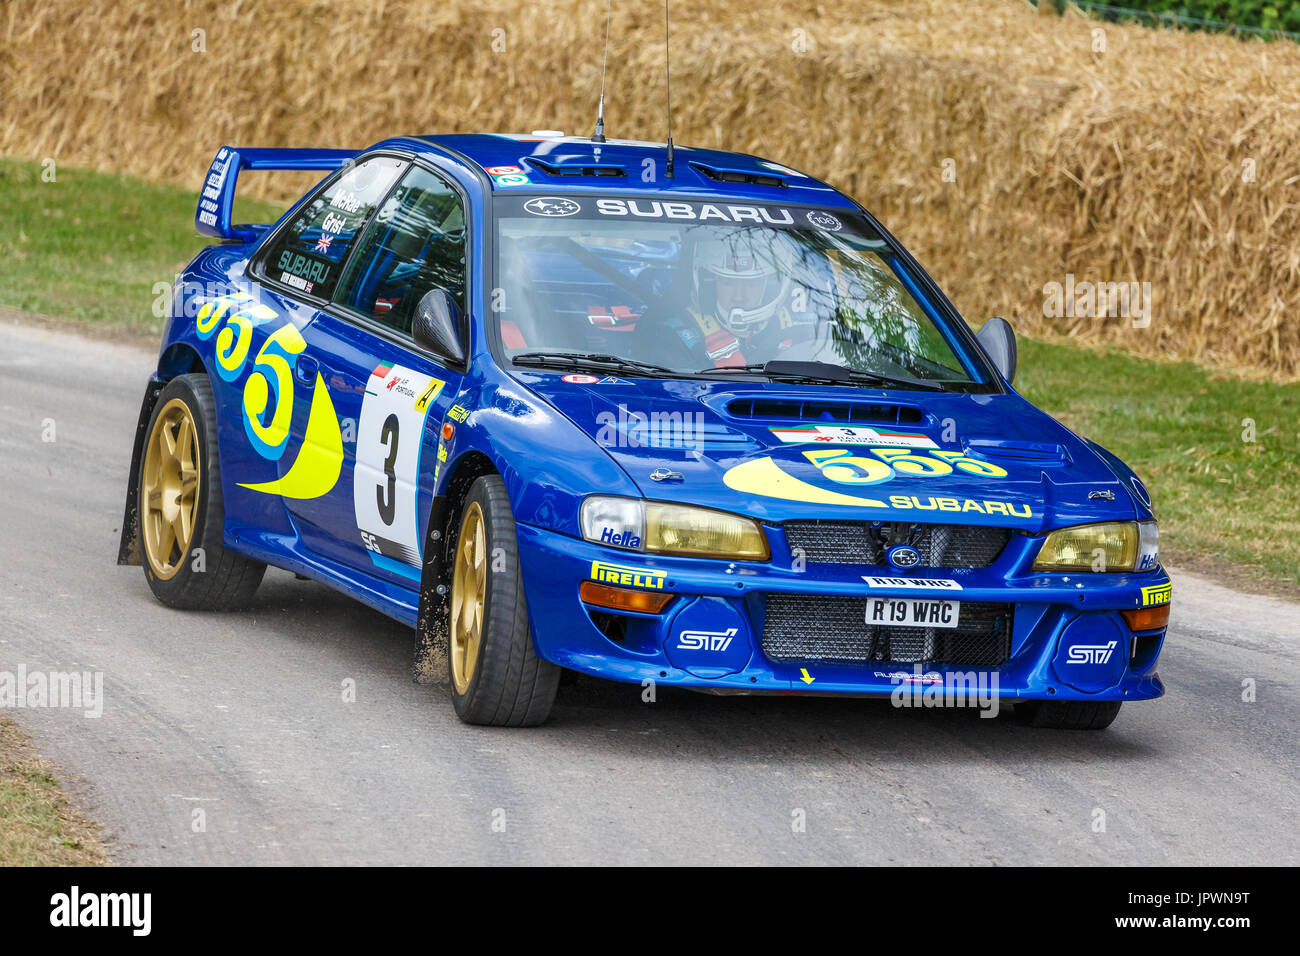 Ex Colin McRae 1997 Subaru Impreza WRC rally car with